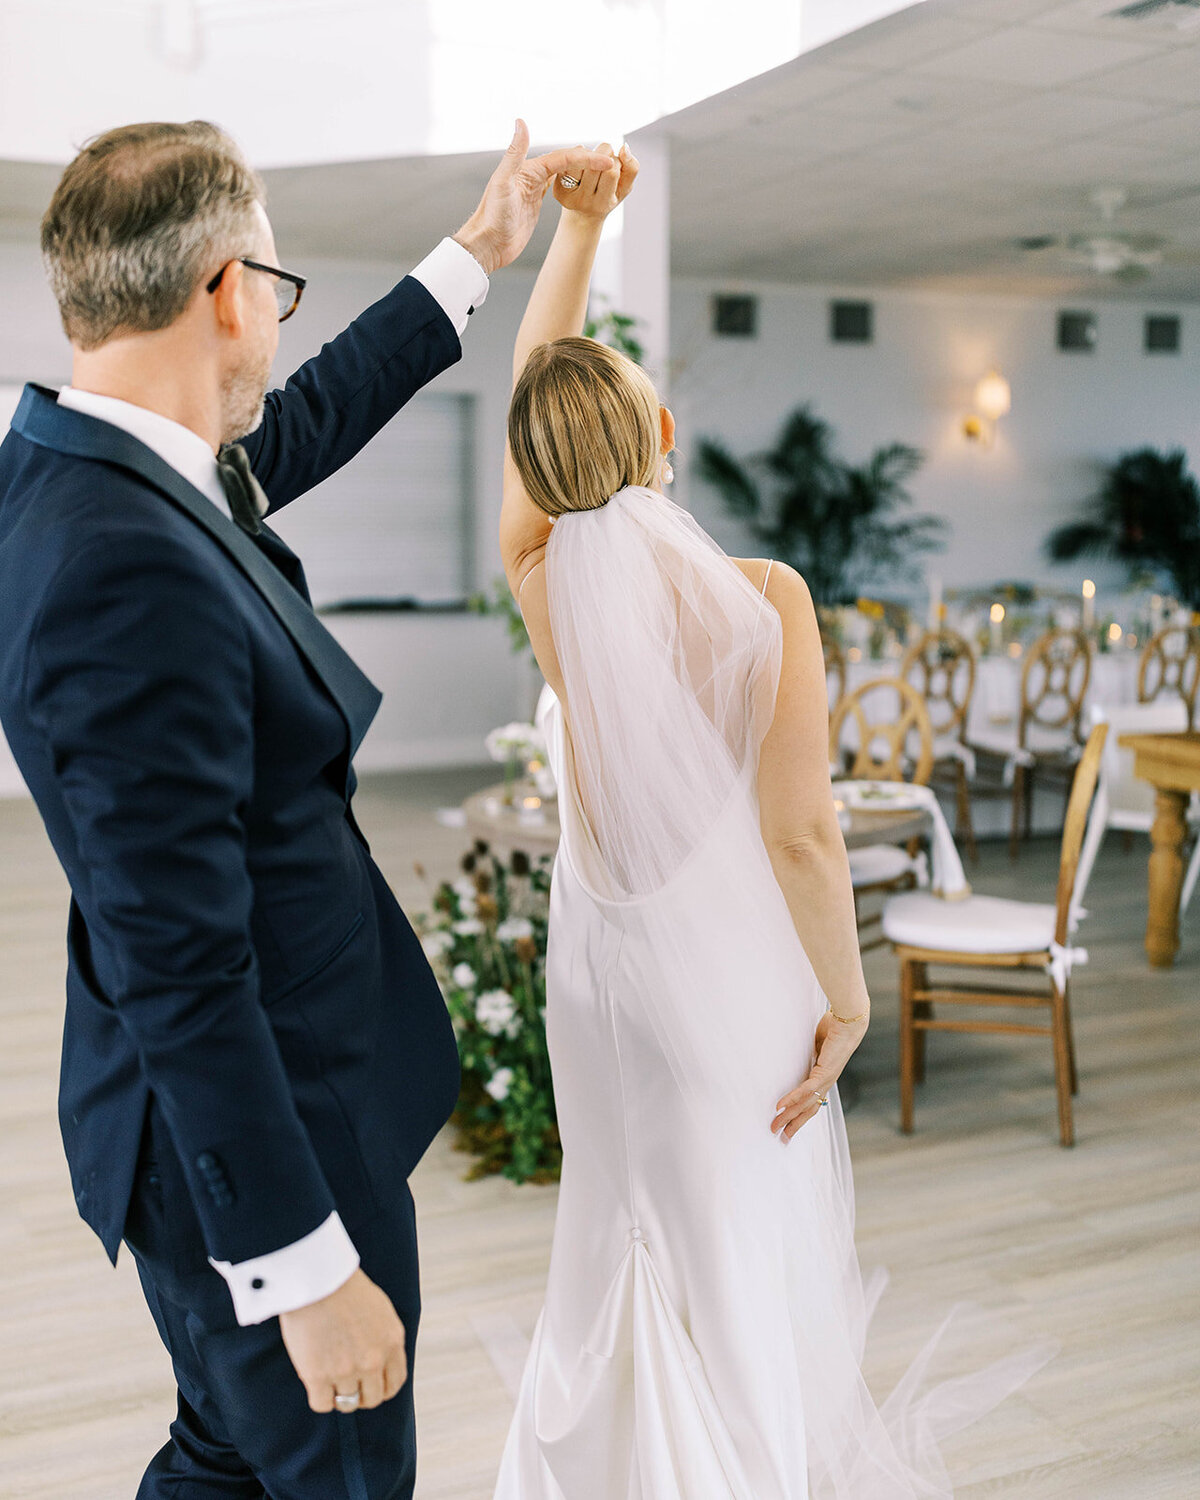 tess & DB - bride & groom - Chrissy O_Neill & Co. - South Florida Wedding Photographer-149